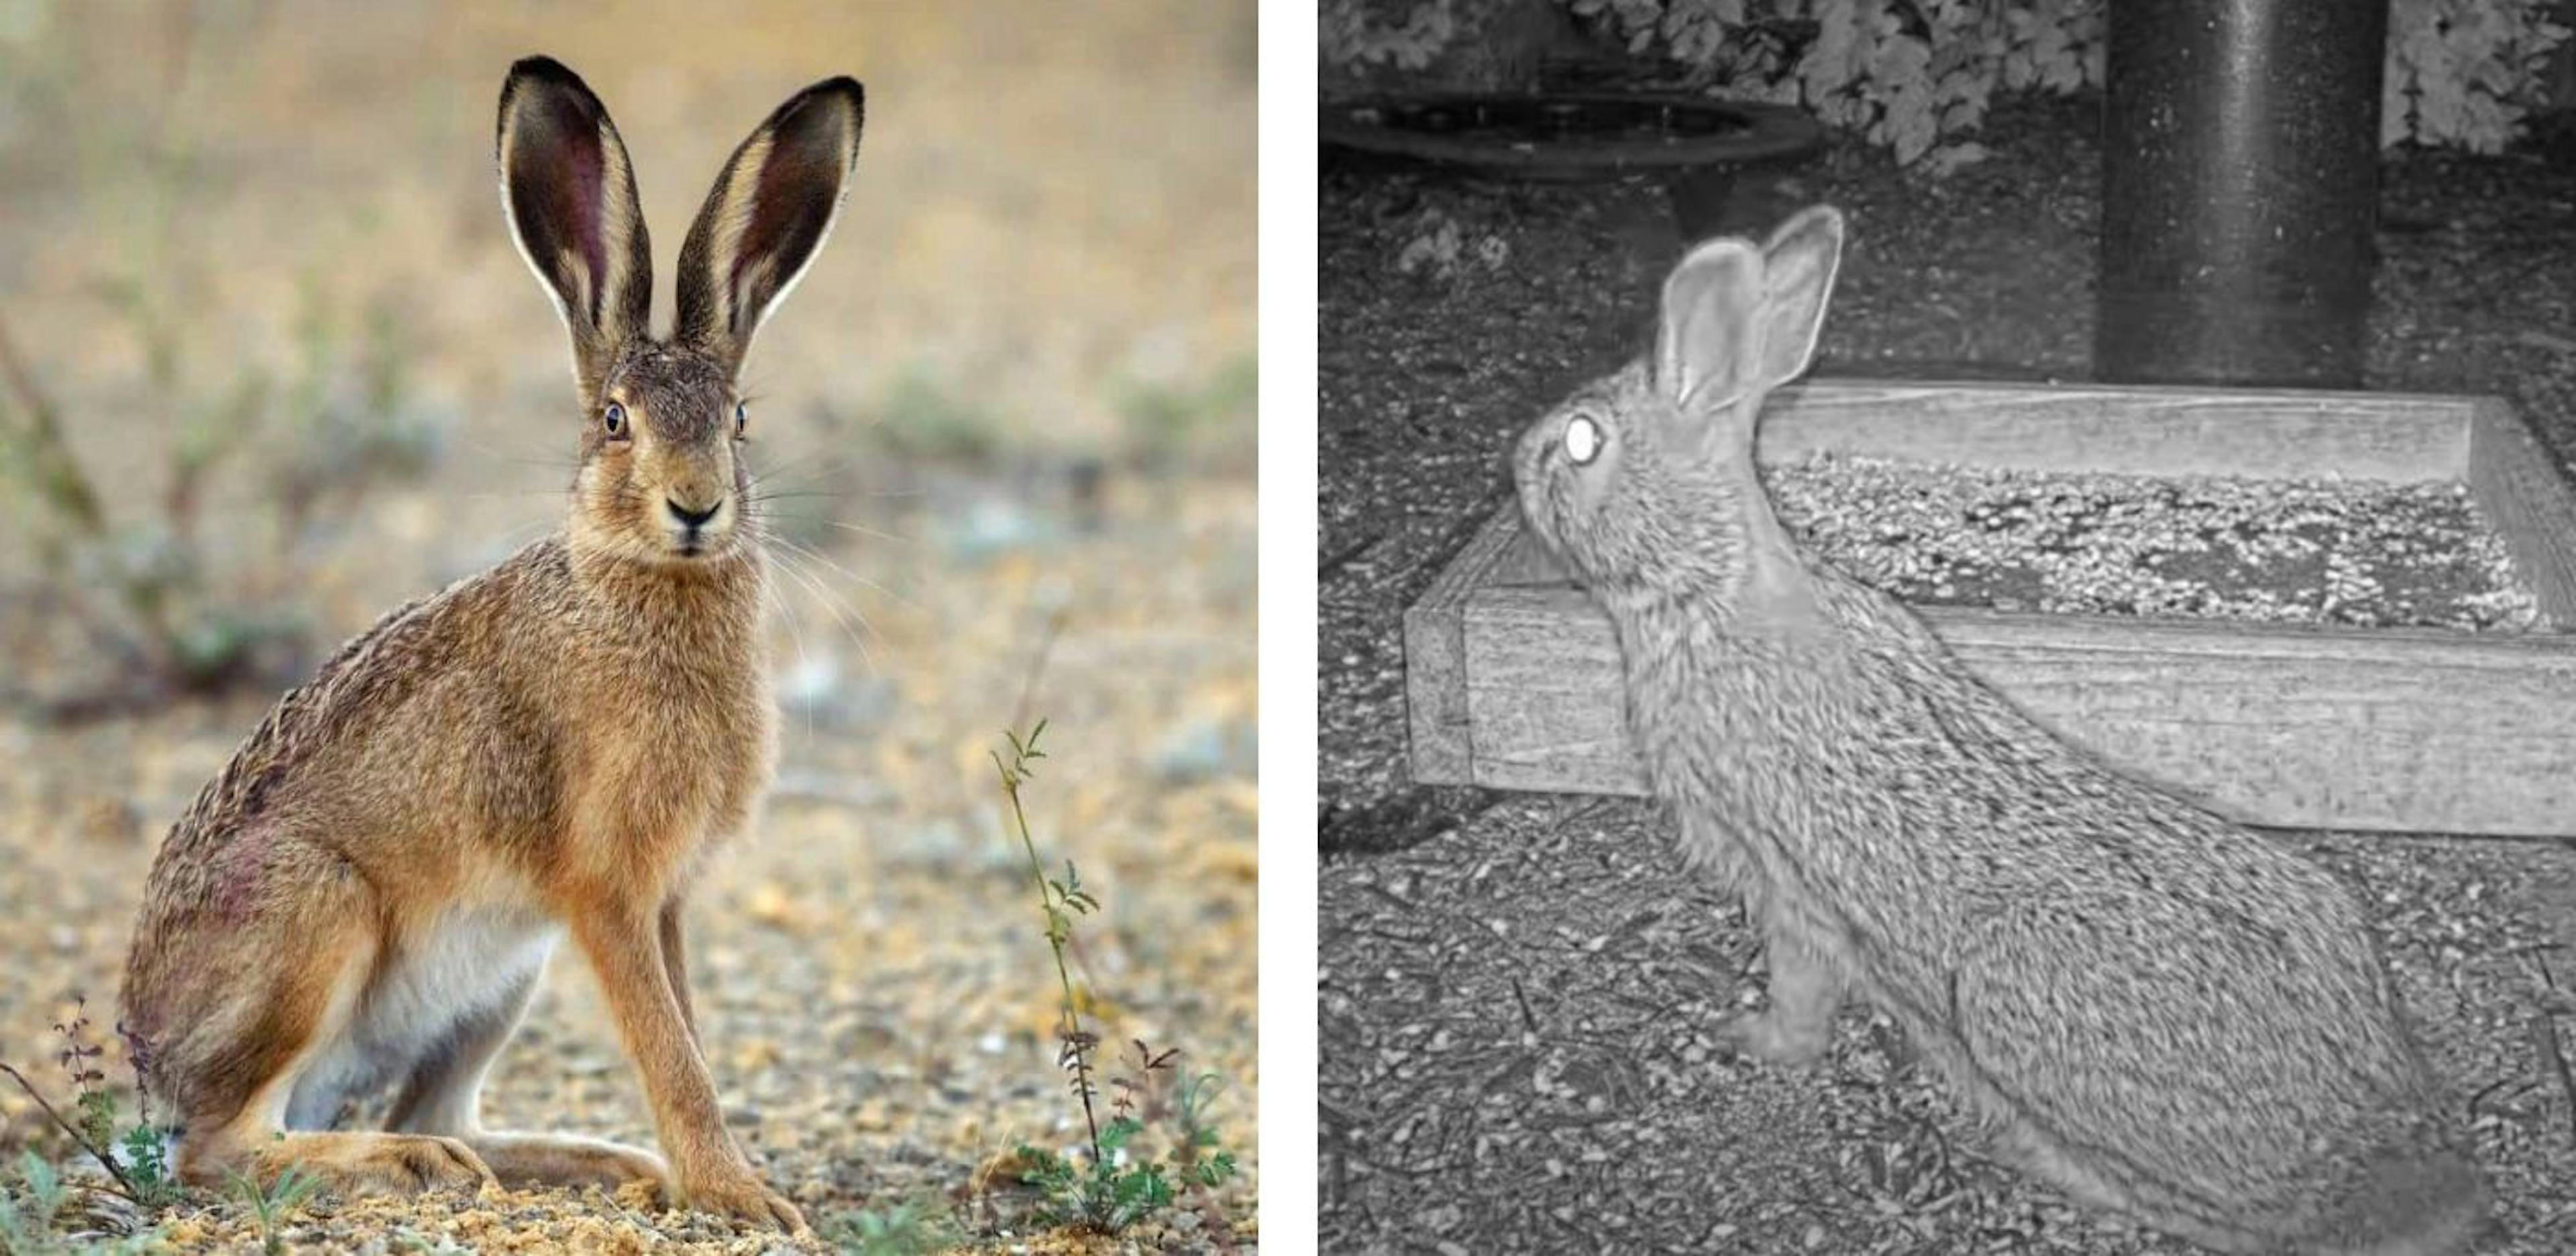 Diversity of input using rabbits